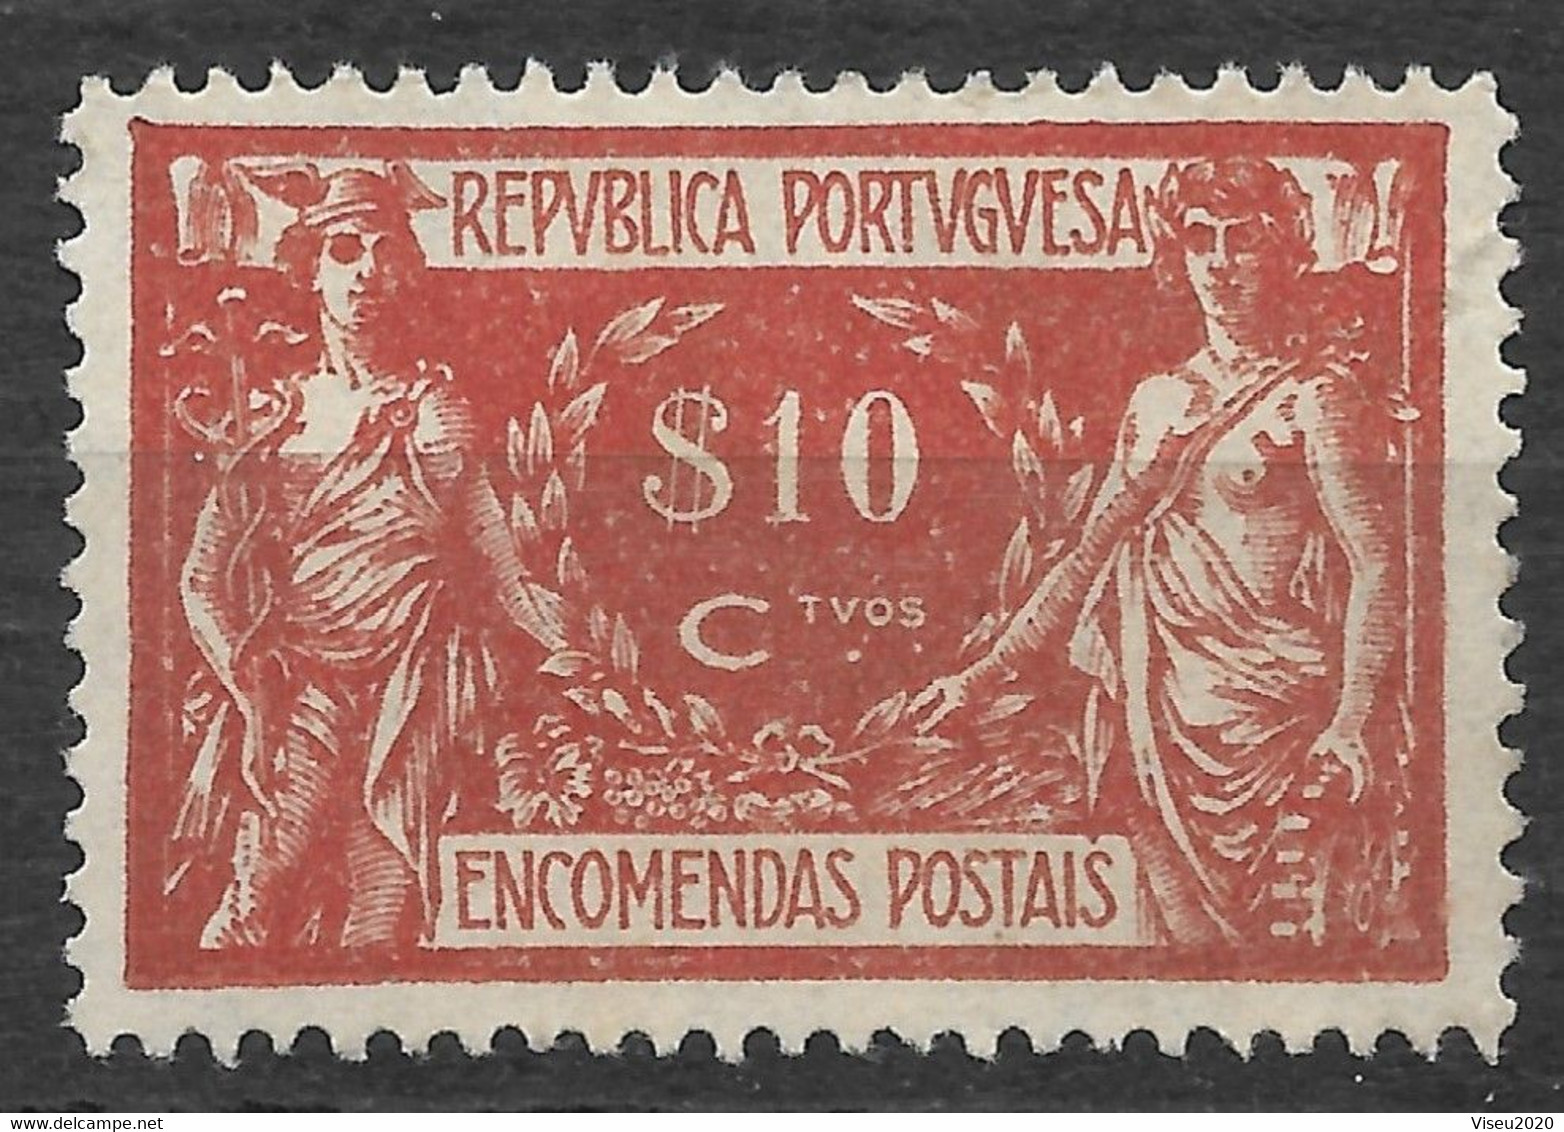 Portugal 1920 - Encomendas Postais - Comercio E Industria - Afinsa 04 - Nuevos